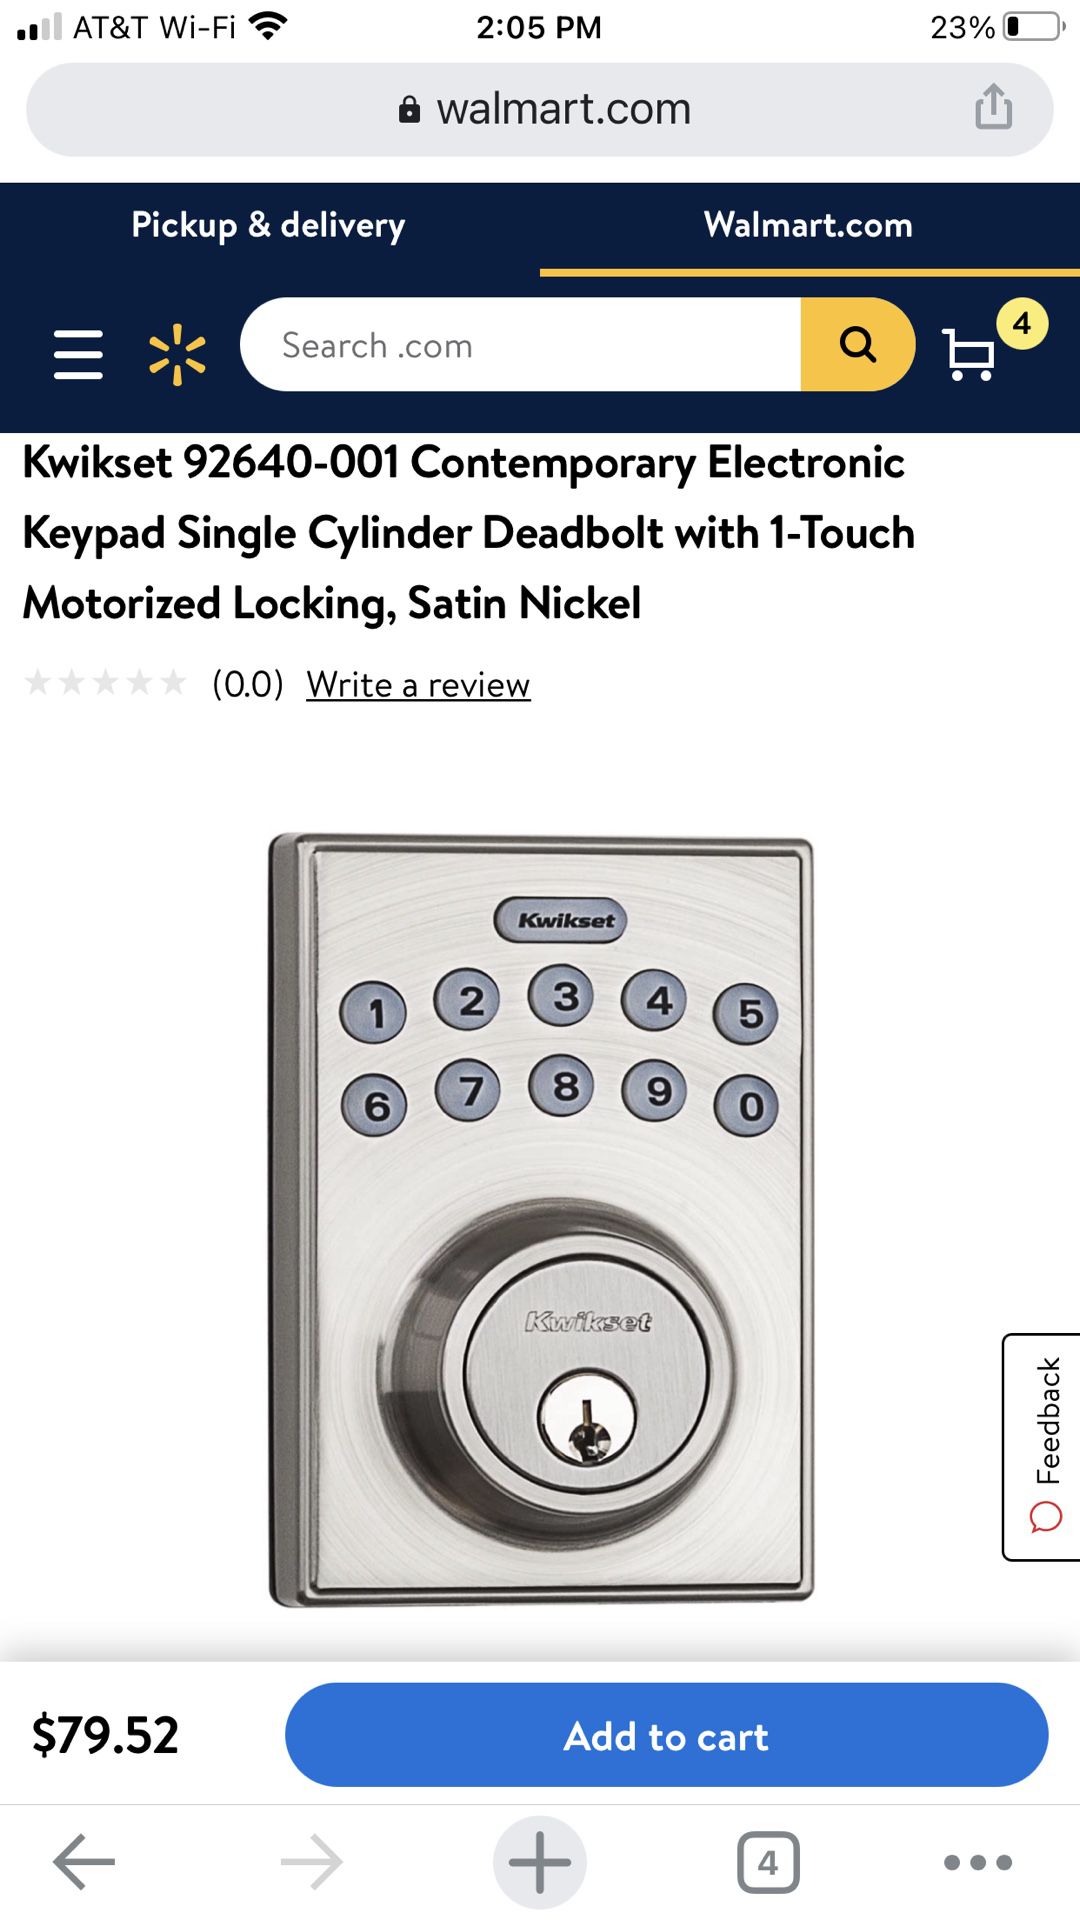 Kwikset 9264 0- 001 Contemporary Electronic Keypad Single Cylinder Deadbolt with 1-Touch Motorized Locking, Satin Nickel